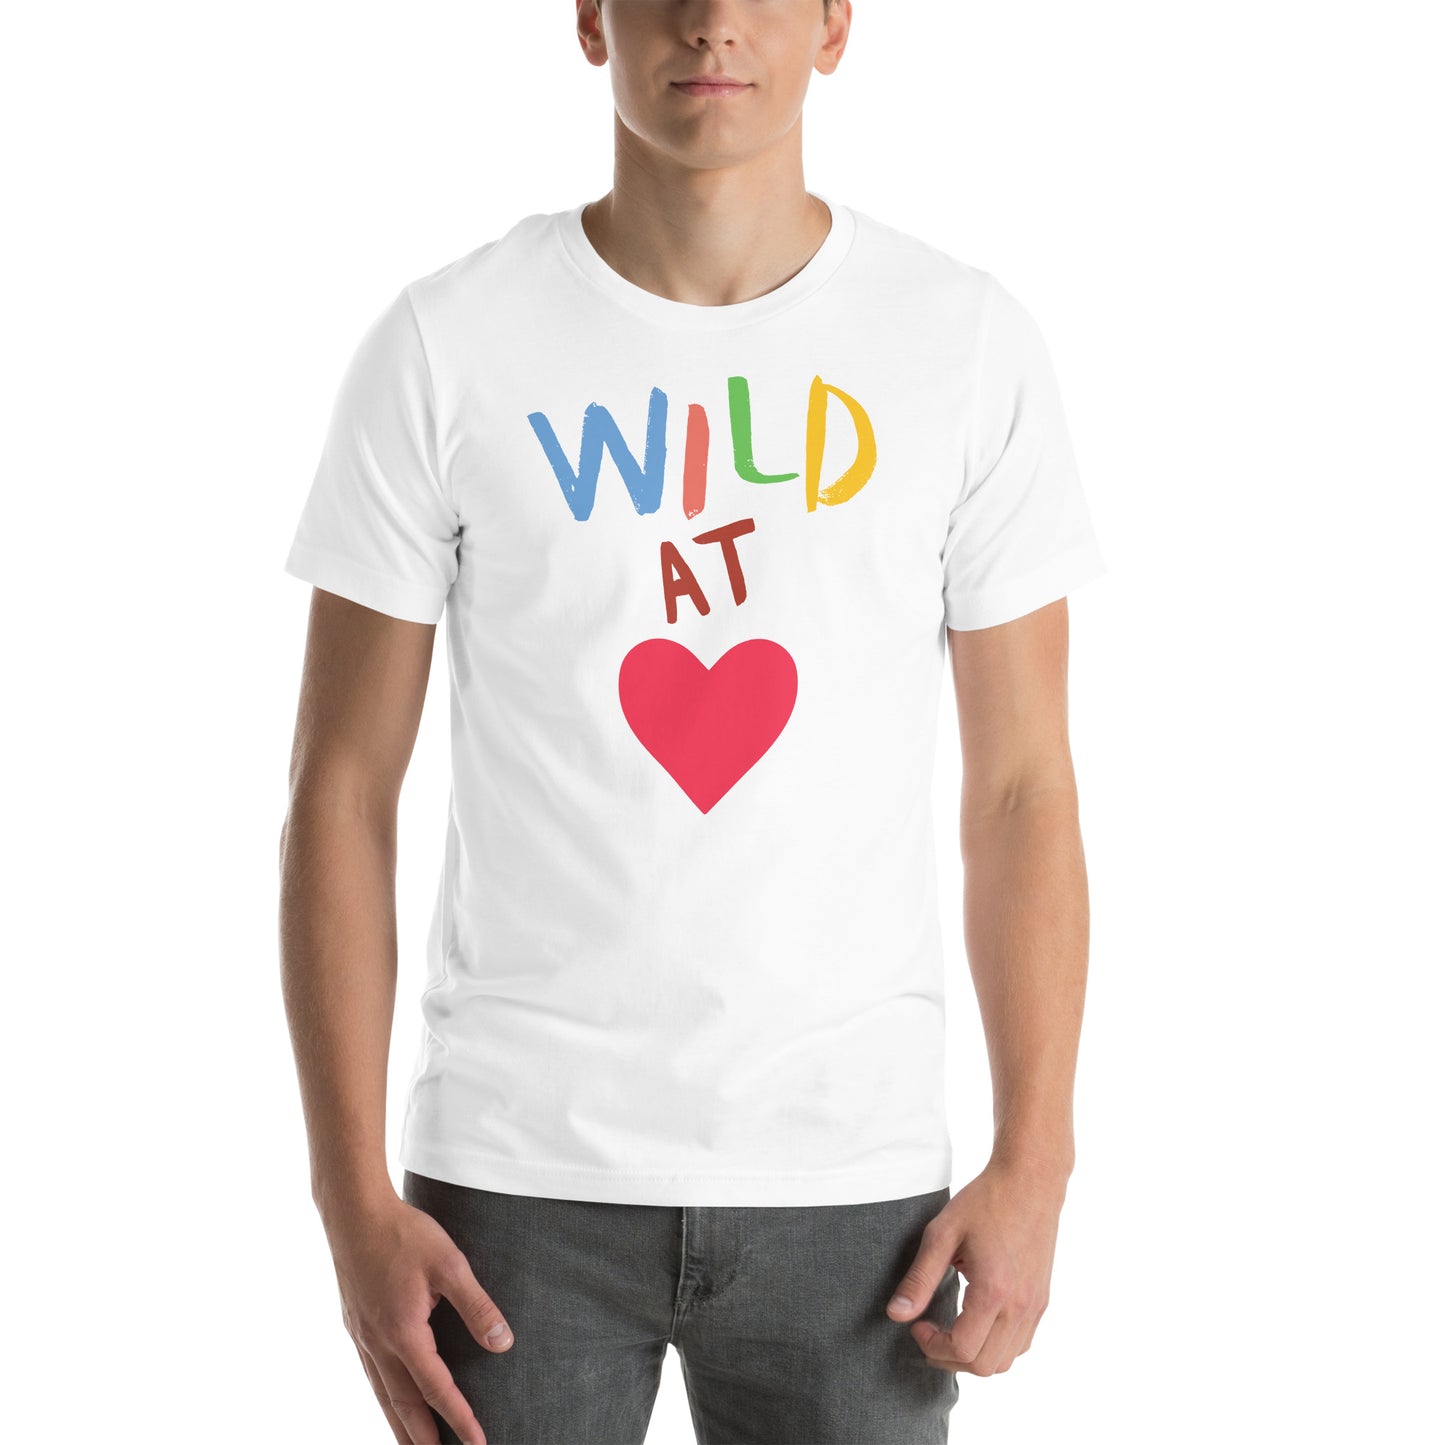 Wild at Heart T-shirt